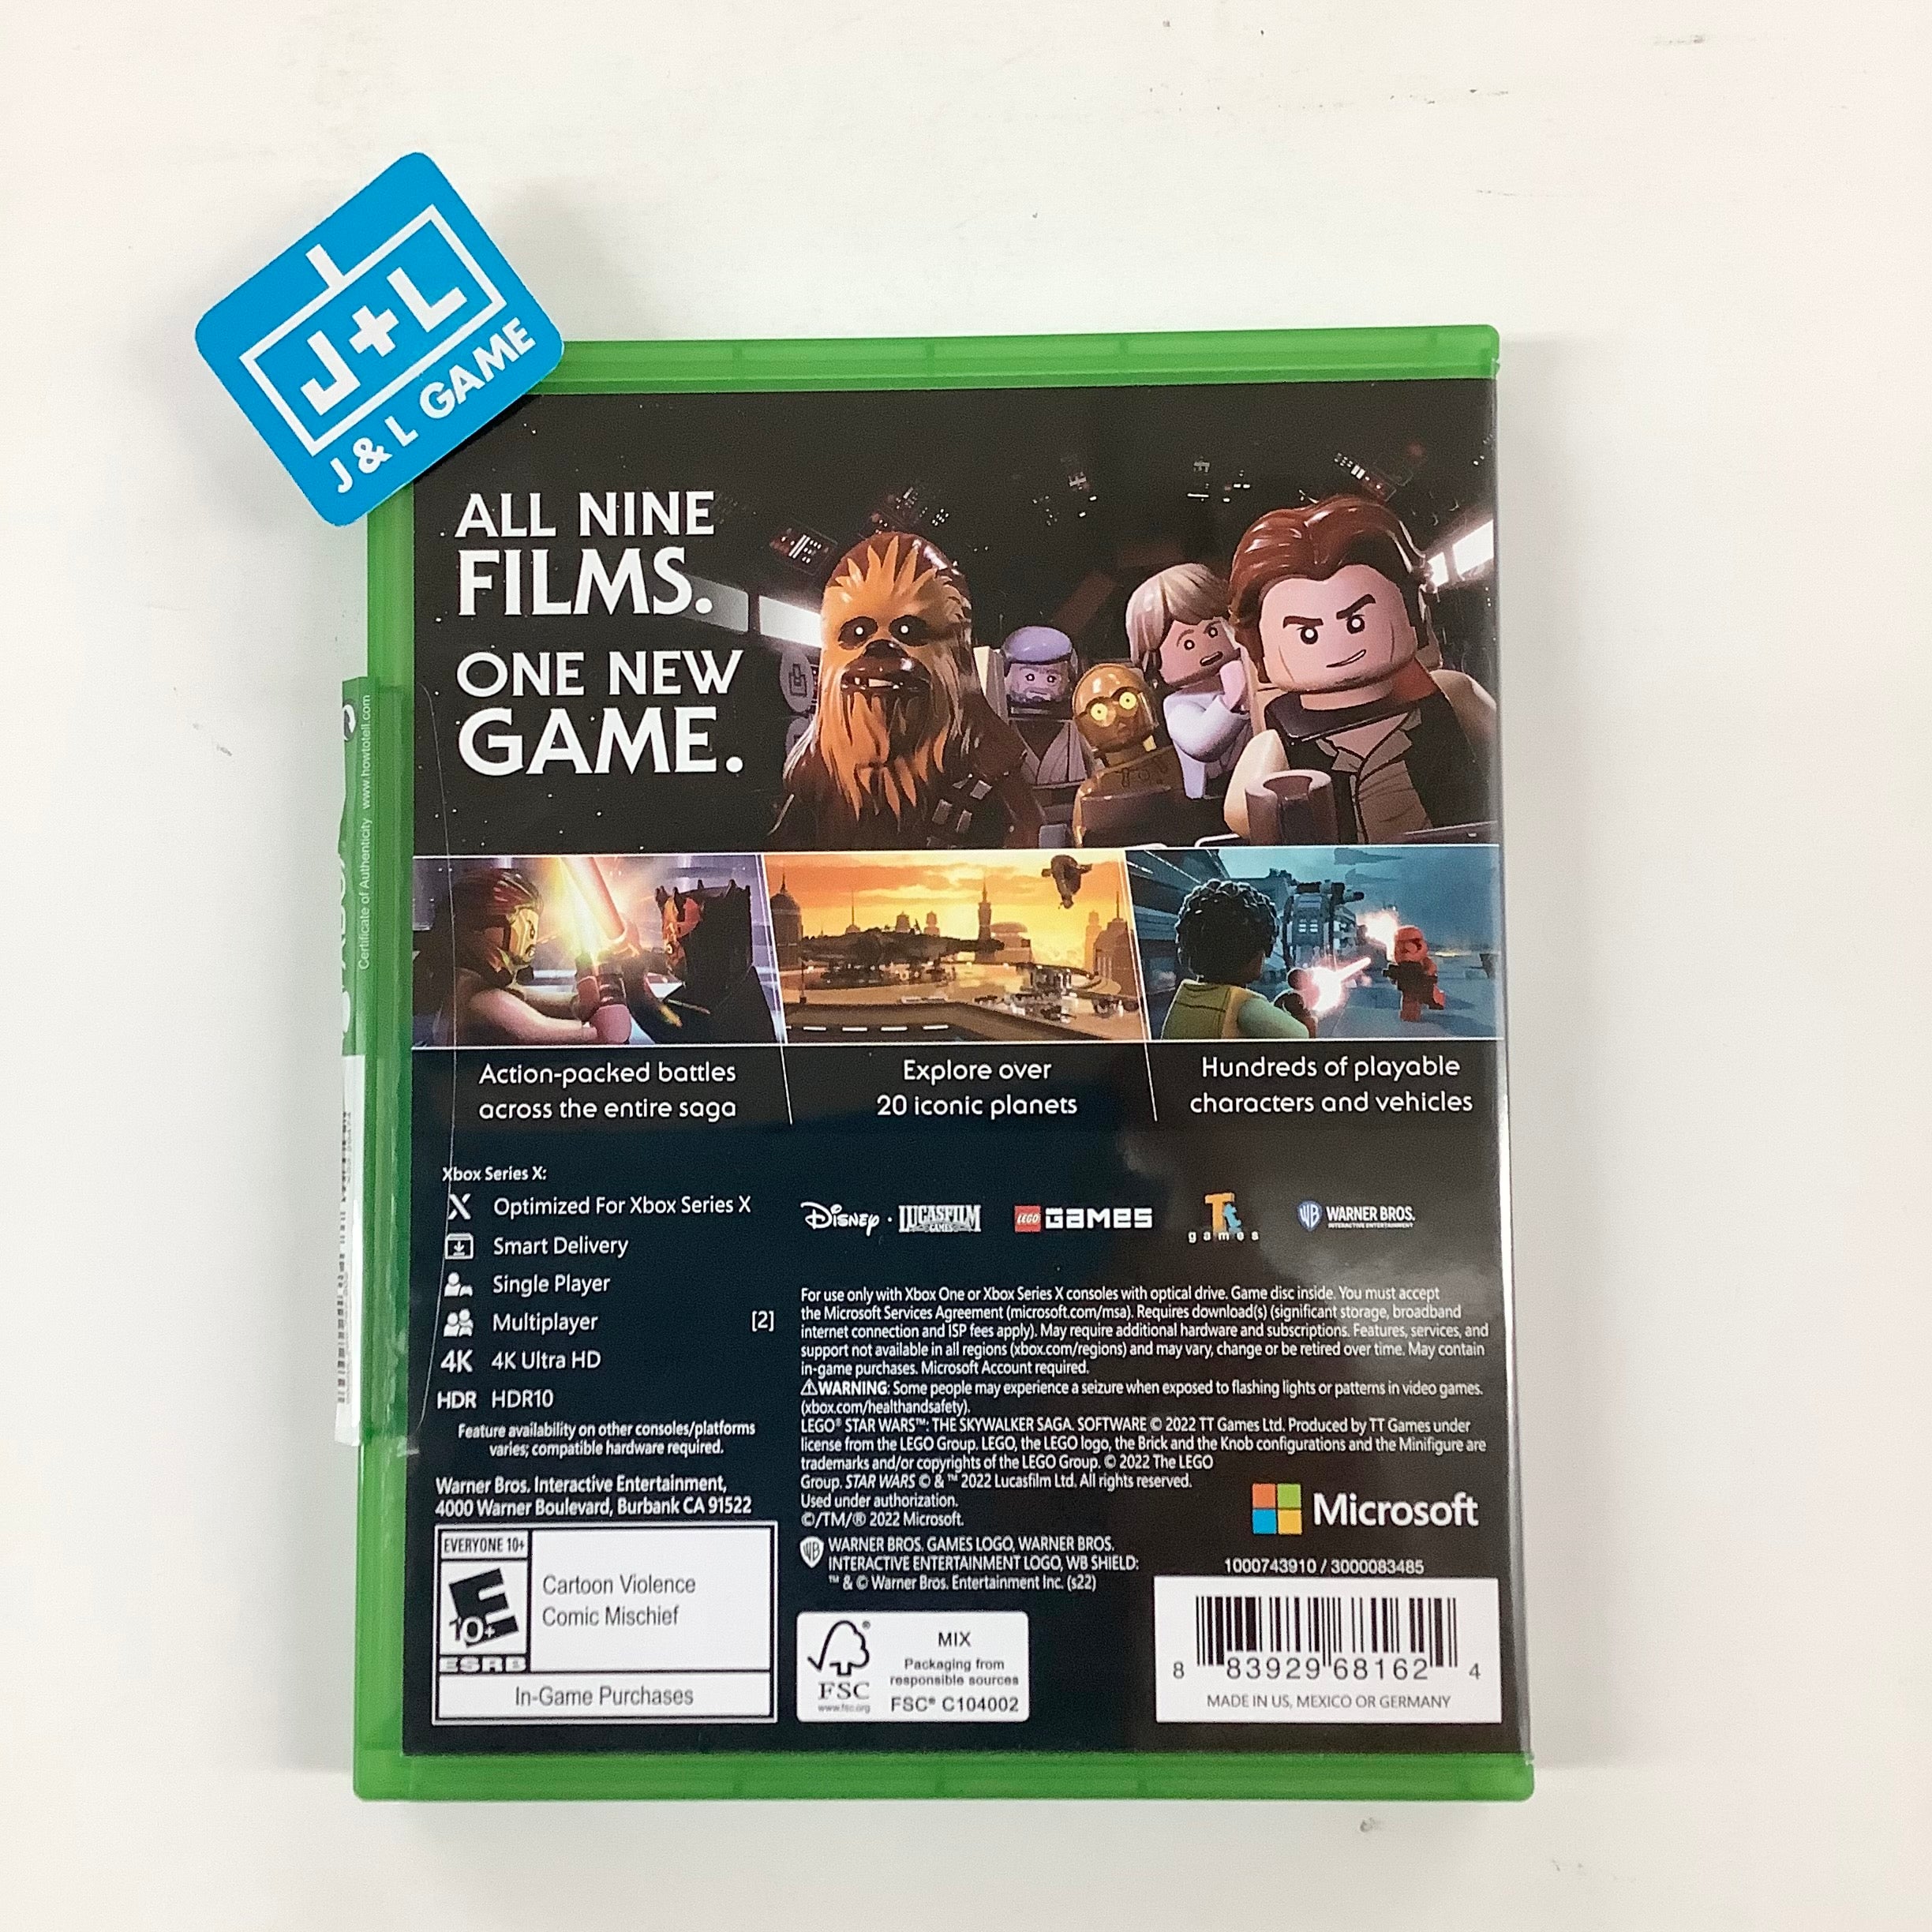 Lego Star Wars: The Skywalker Saga - (XSX) Xbox Series X [UNBOXING] Video Games WB Games   